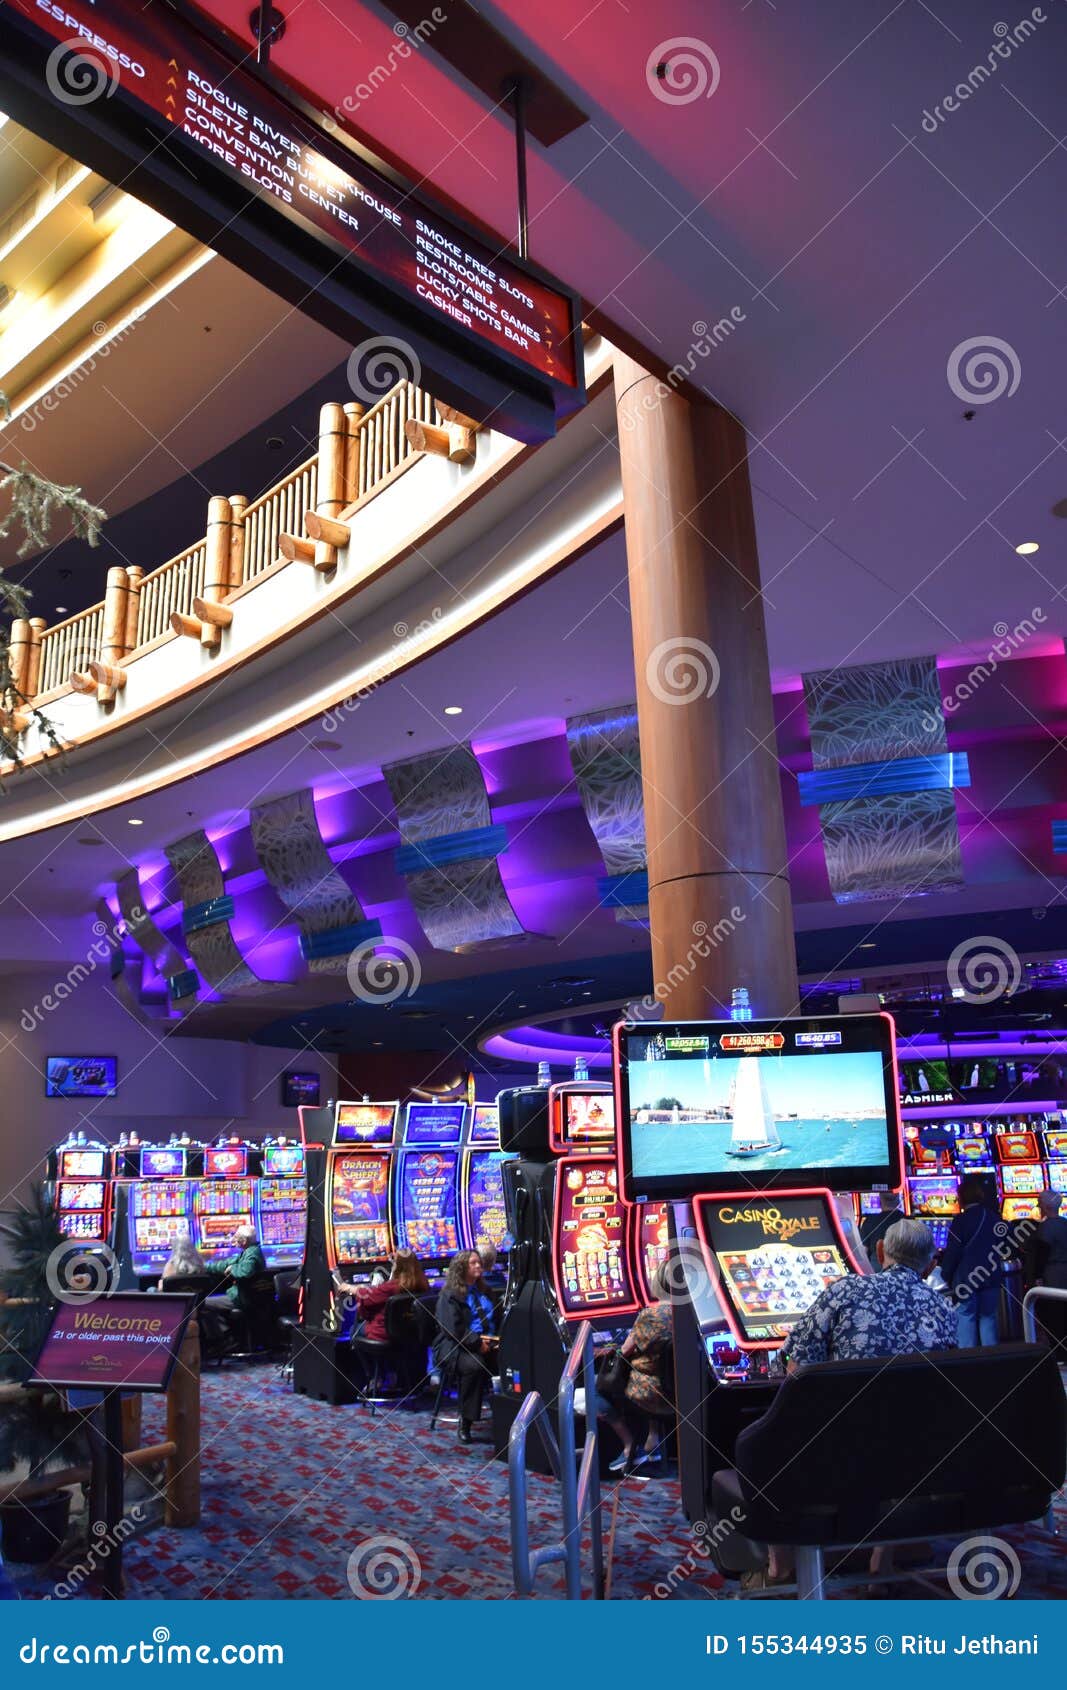 10 Unforgivable Sins Of top casino